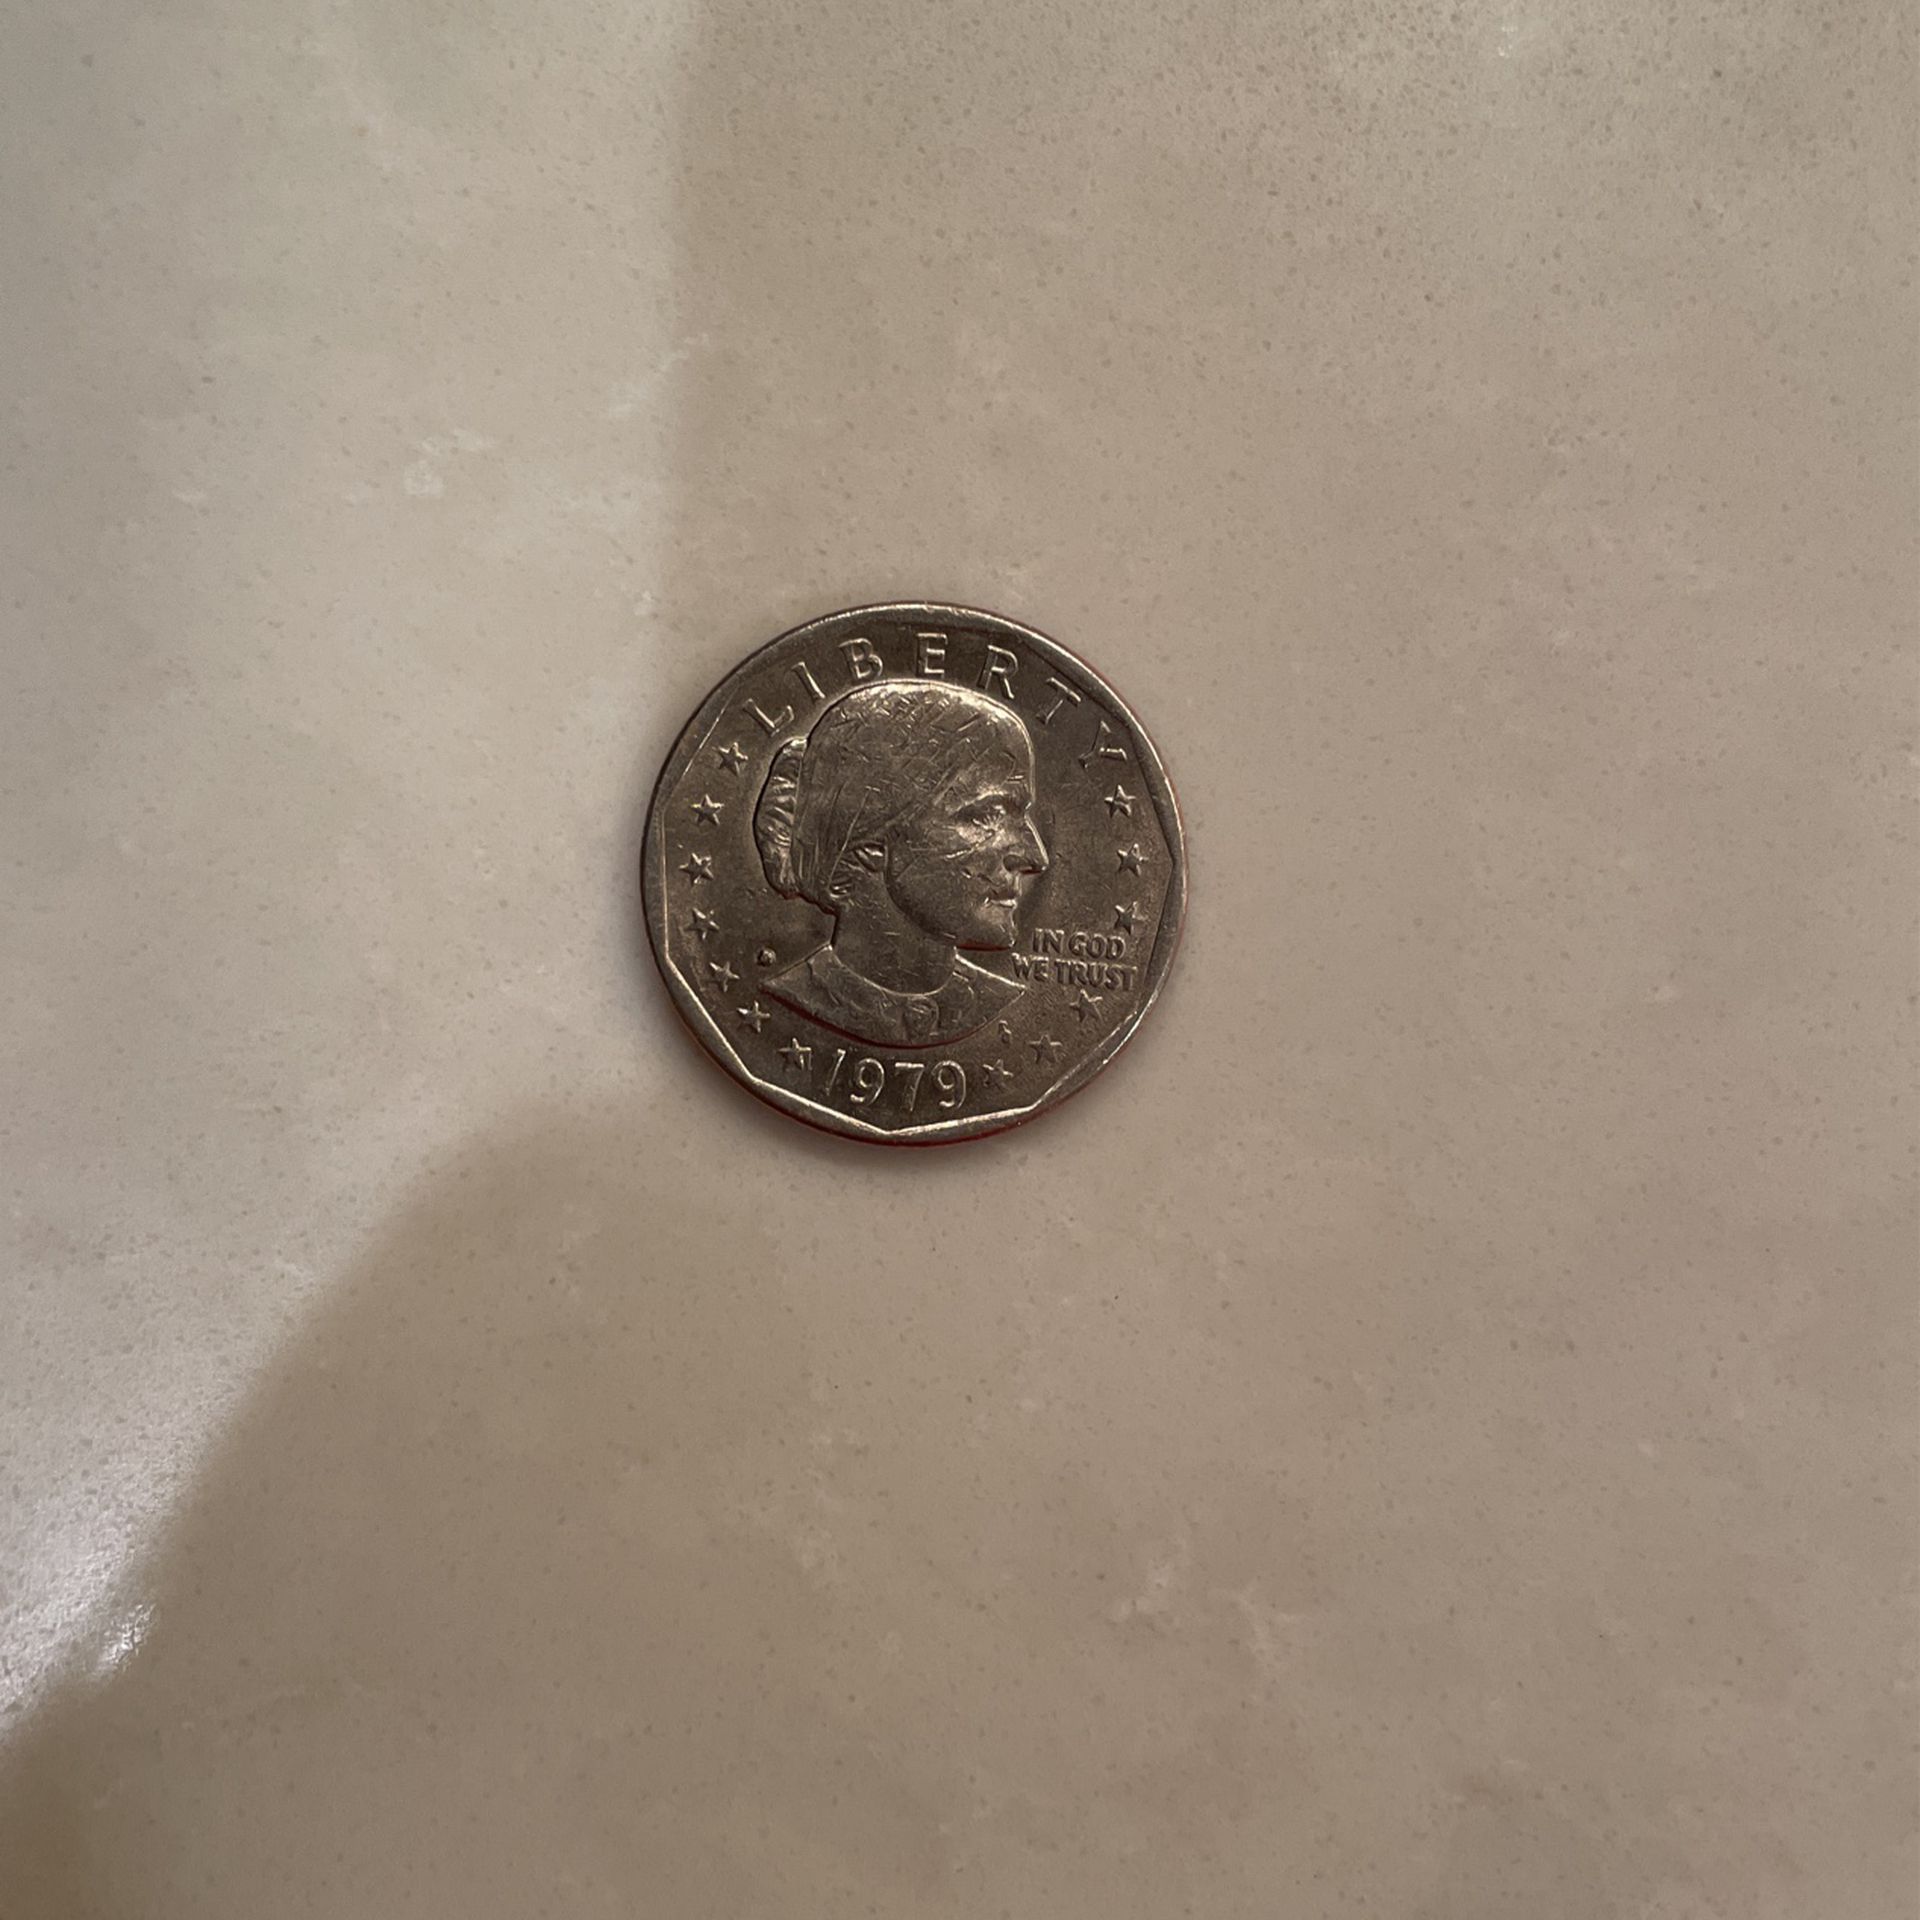 Super Rare 1979 One Dollar Coin